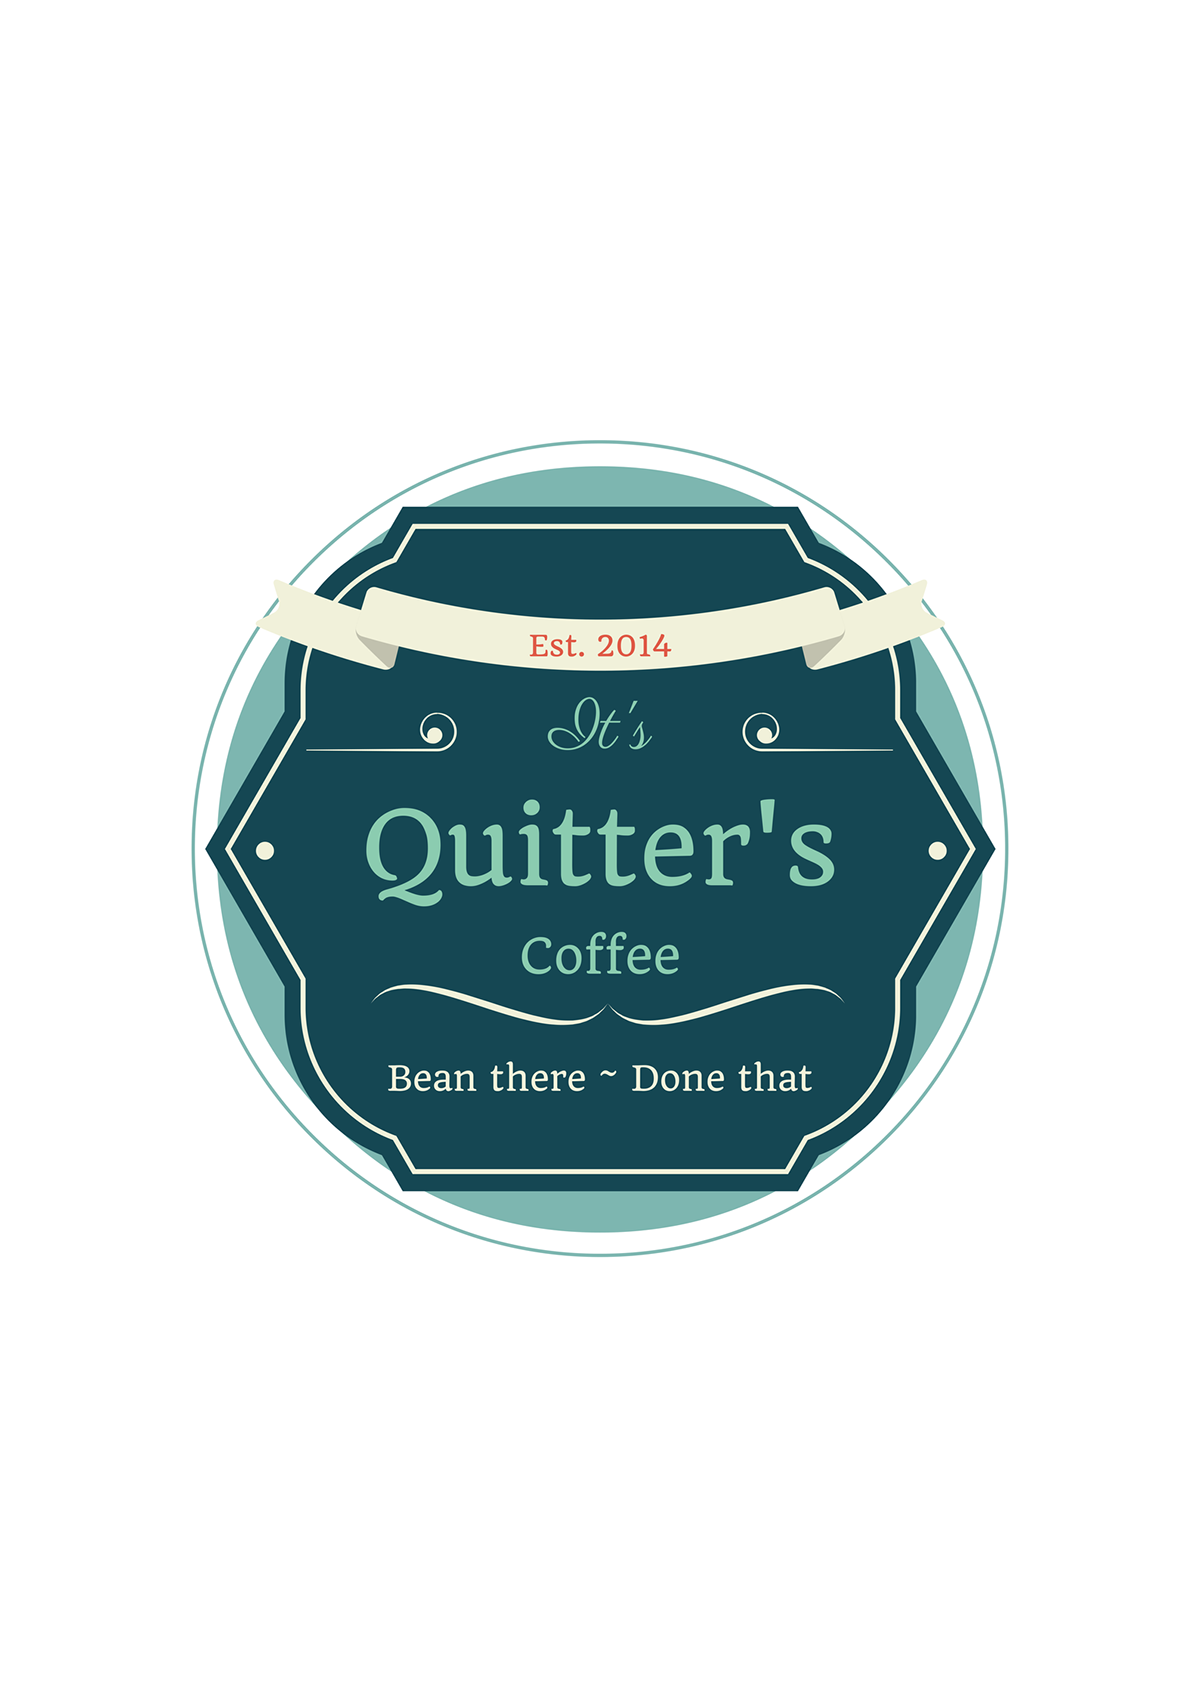 Coffee coffeeshop restaurant logo logos minimal simple clean